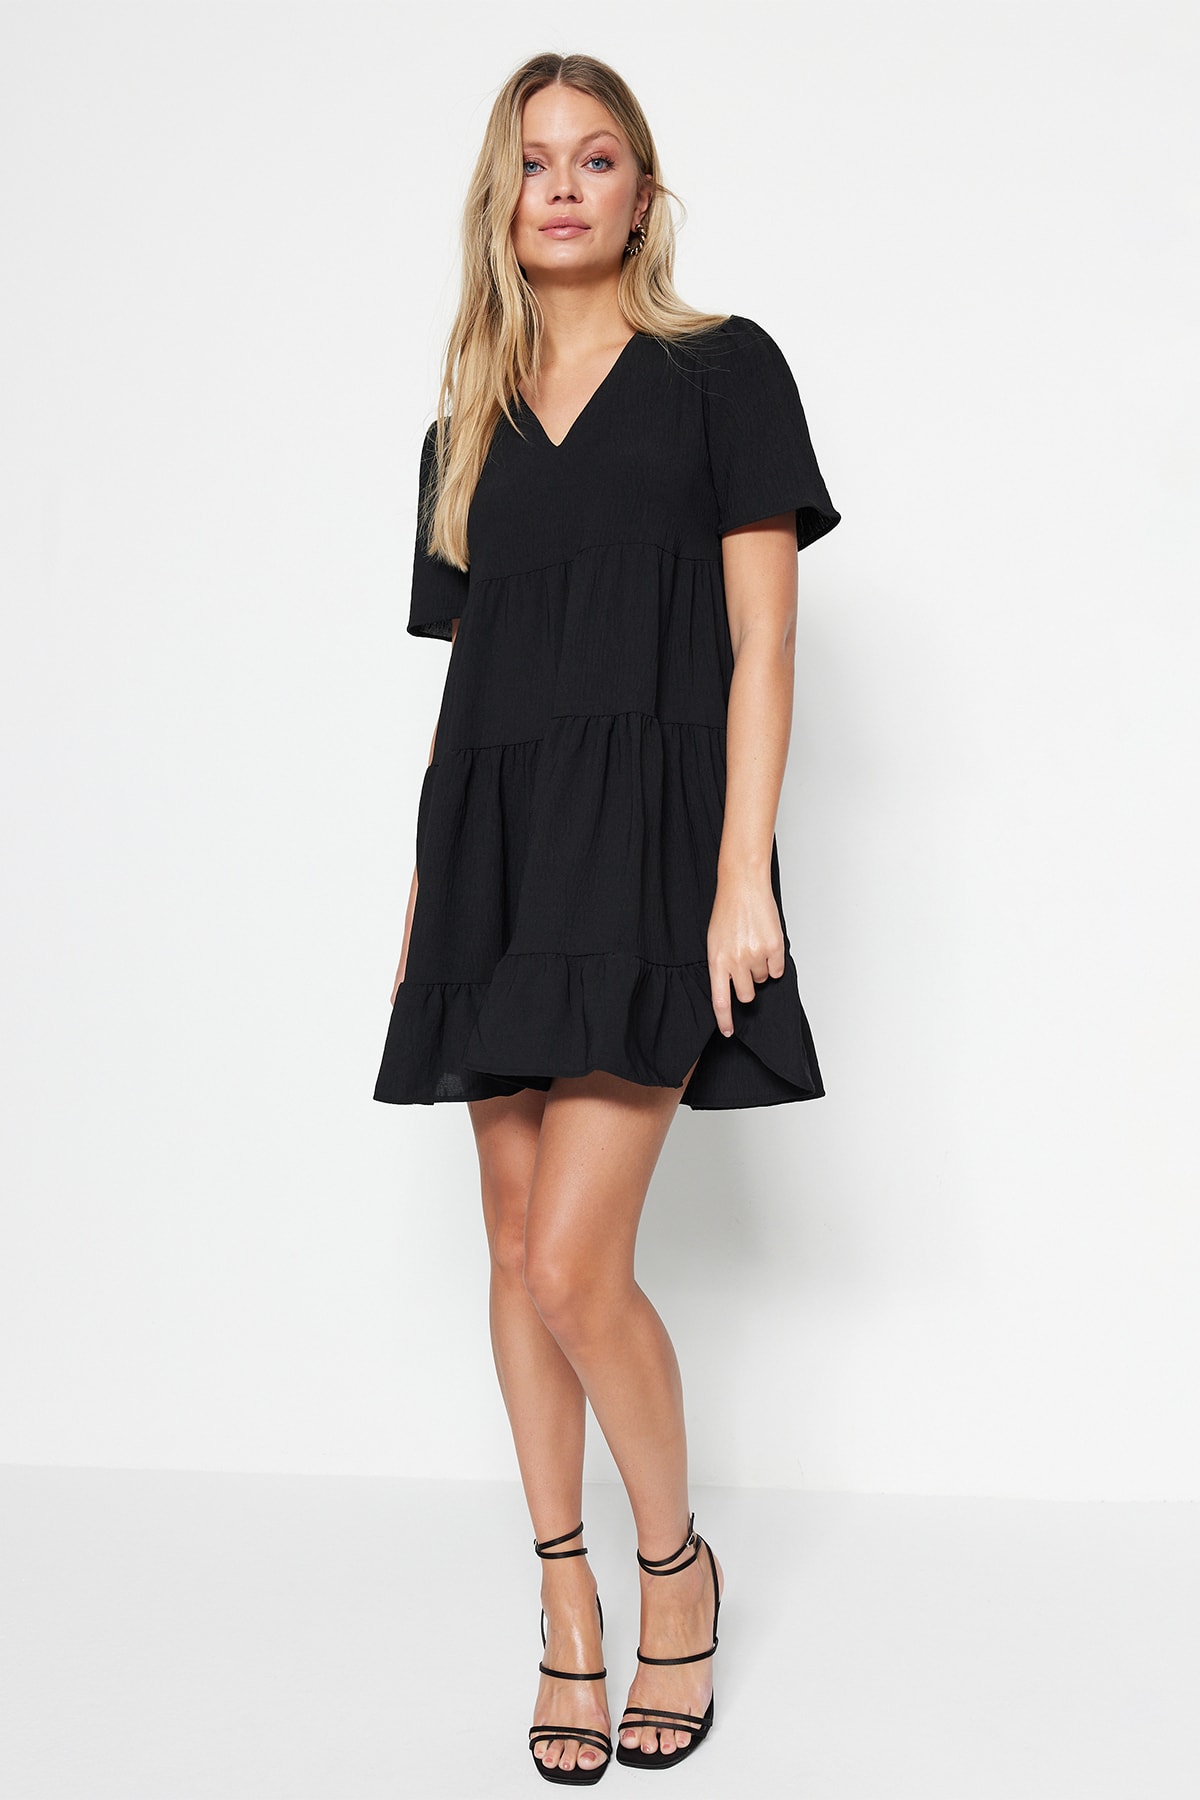 Trendyol Collection Dress - Black - Shift